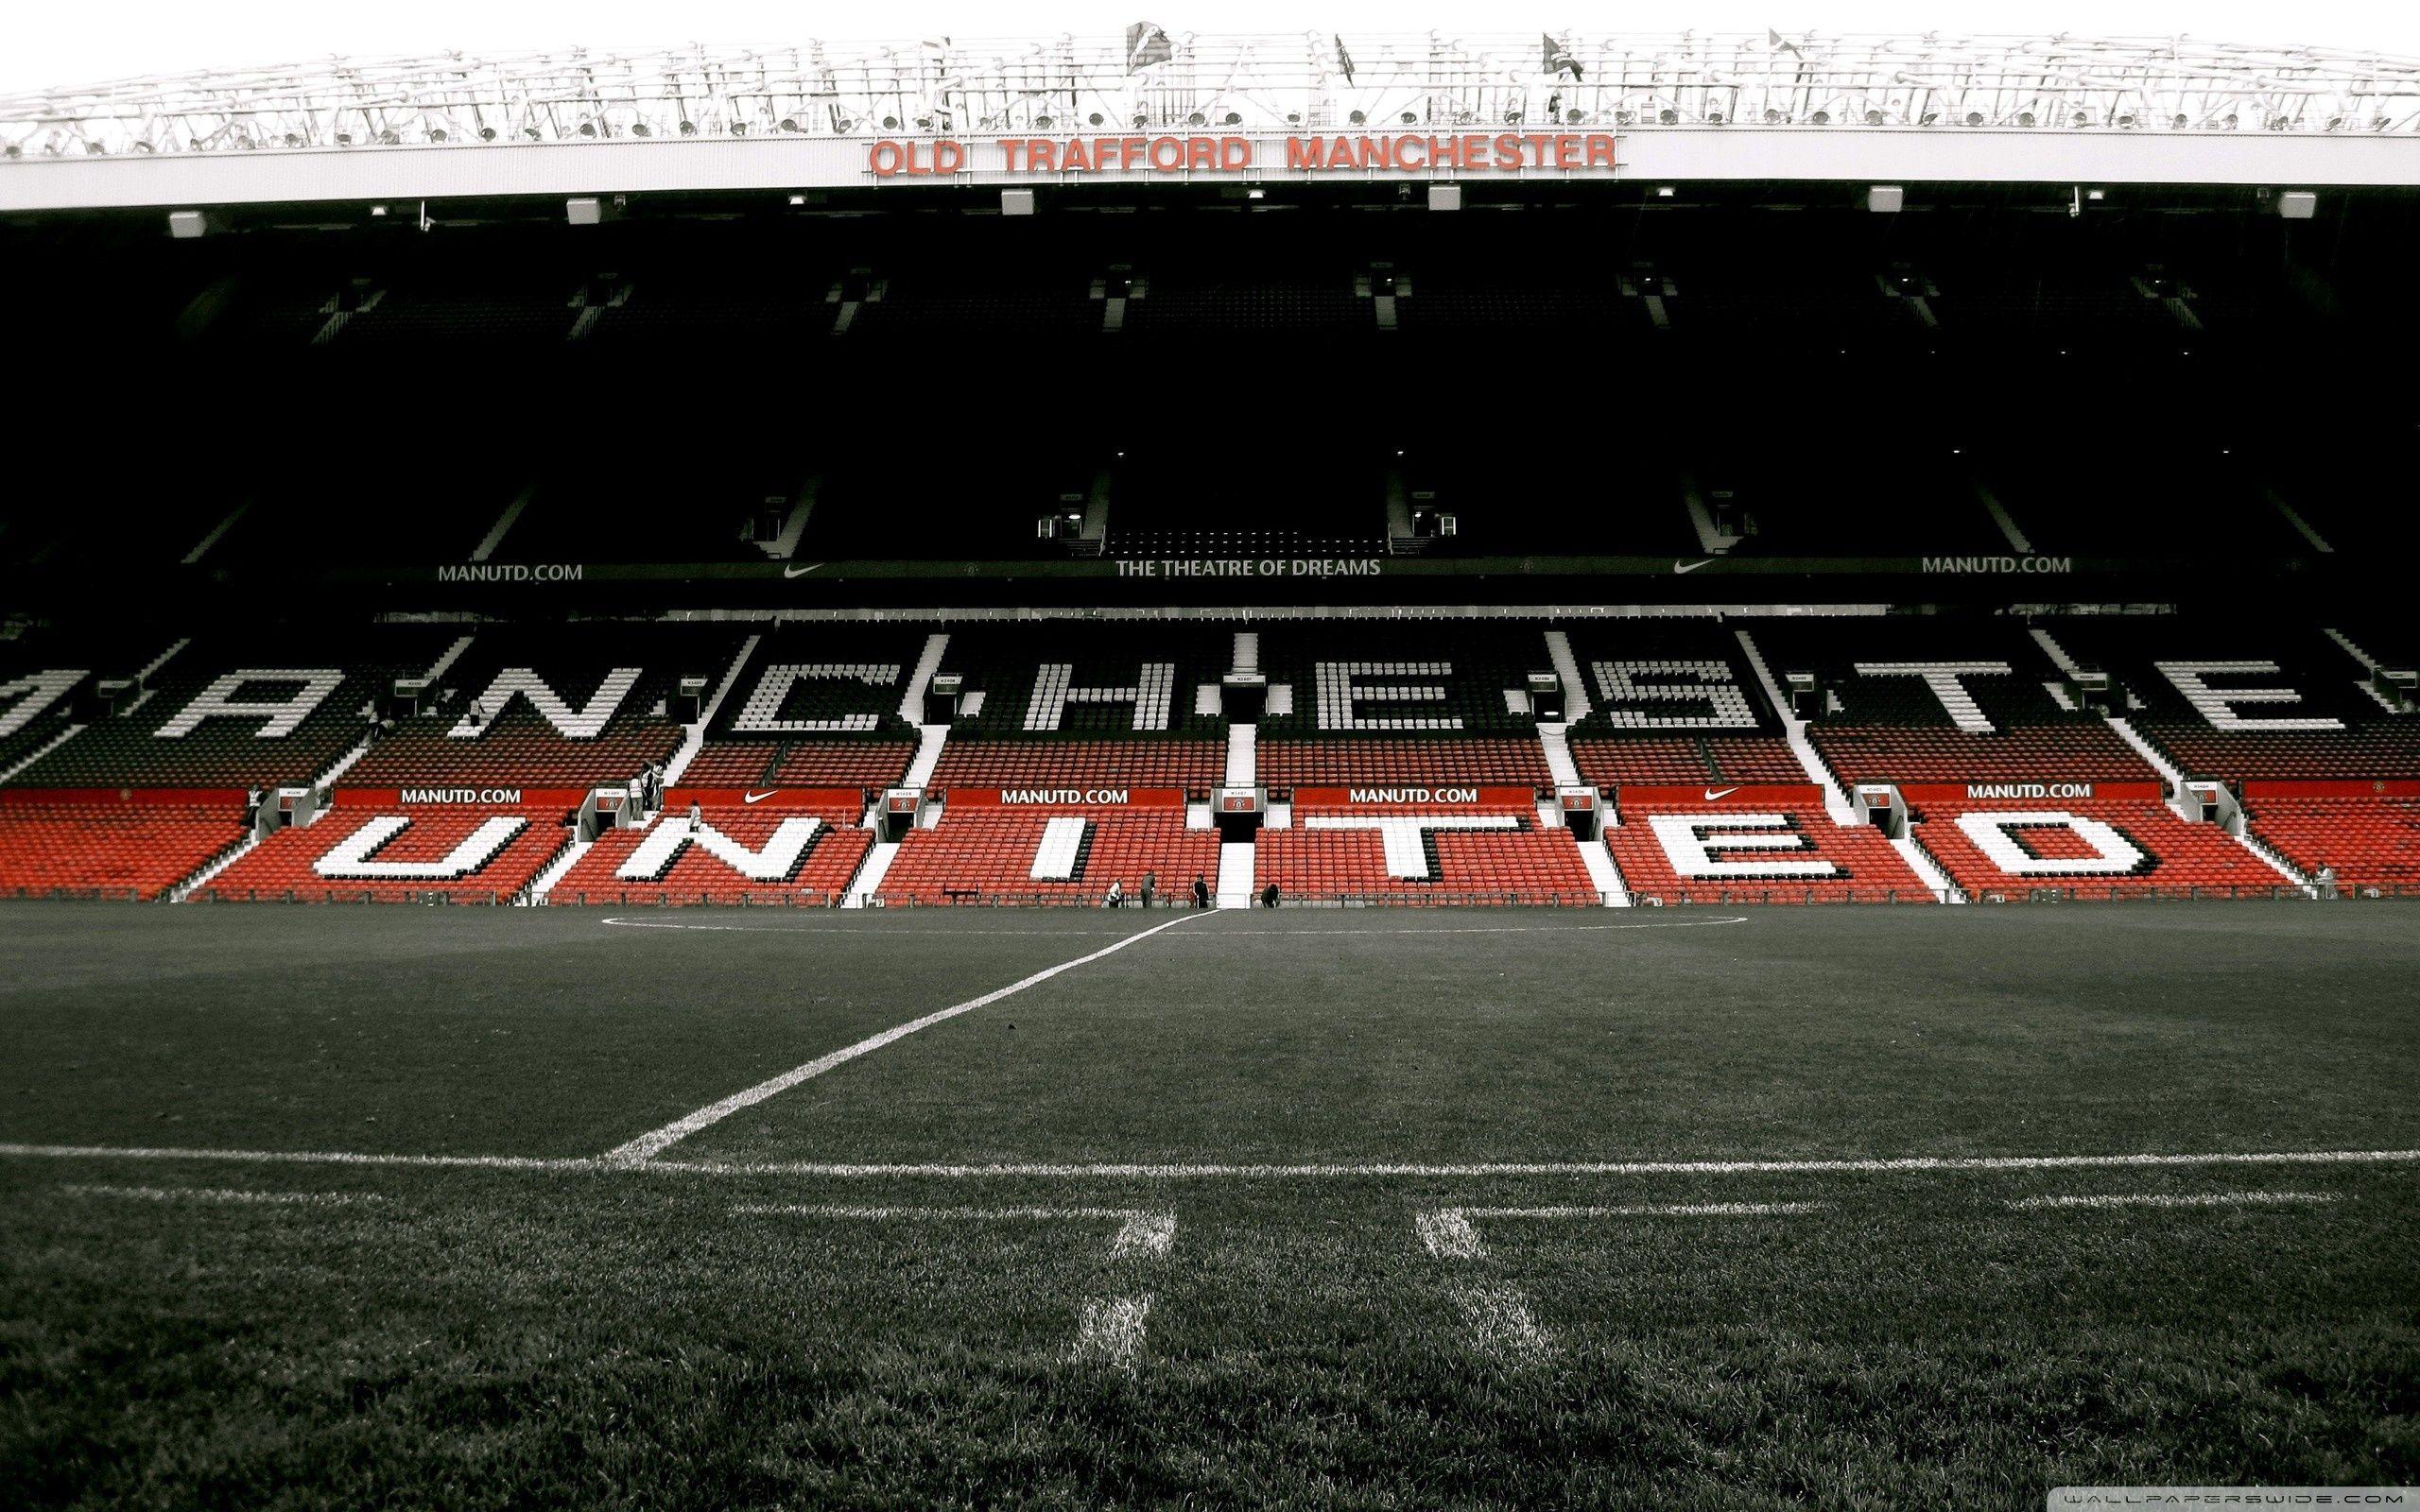 Hd Image In Manchester United Full Team Of Desktop Stadium